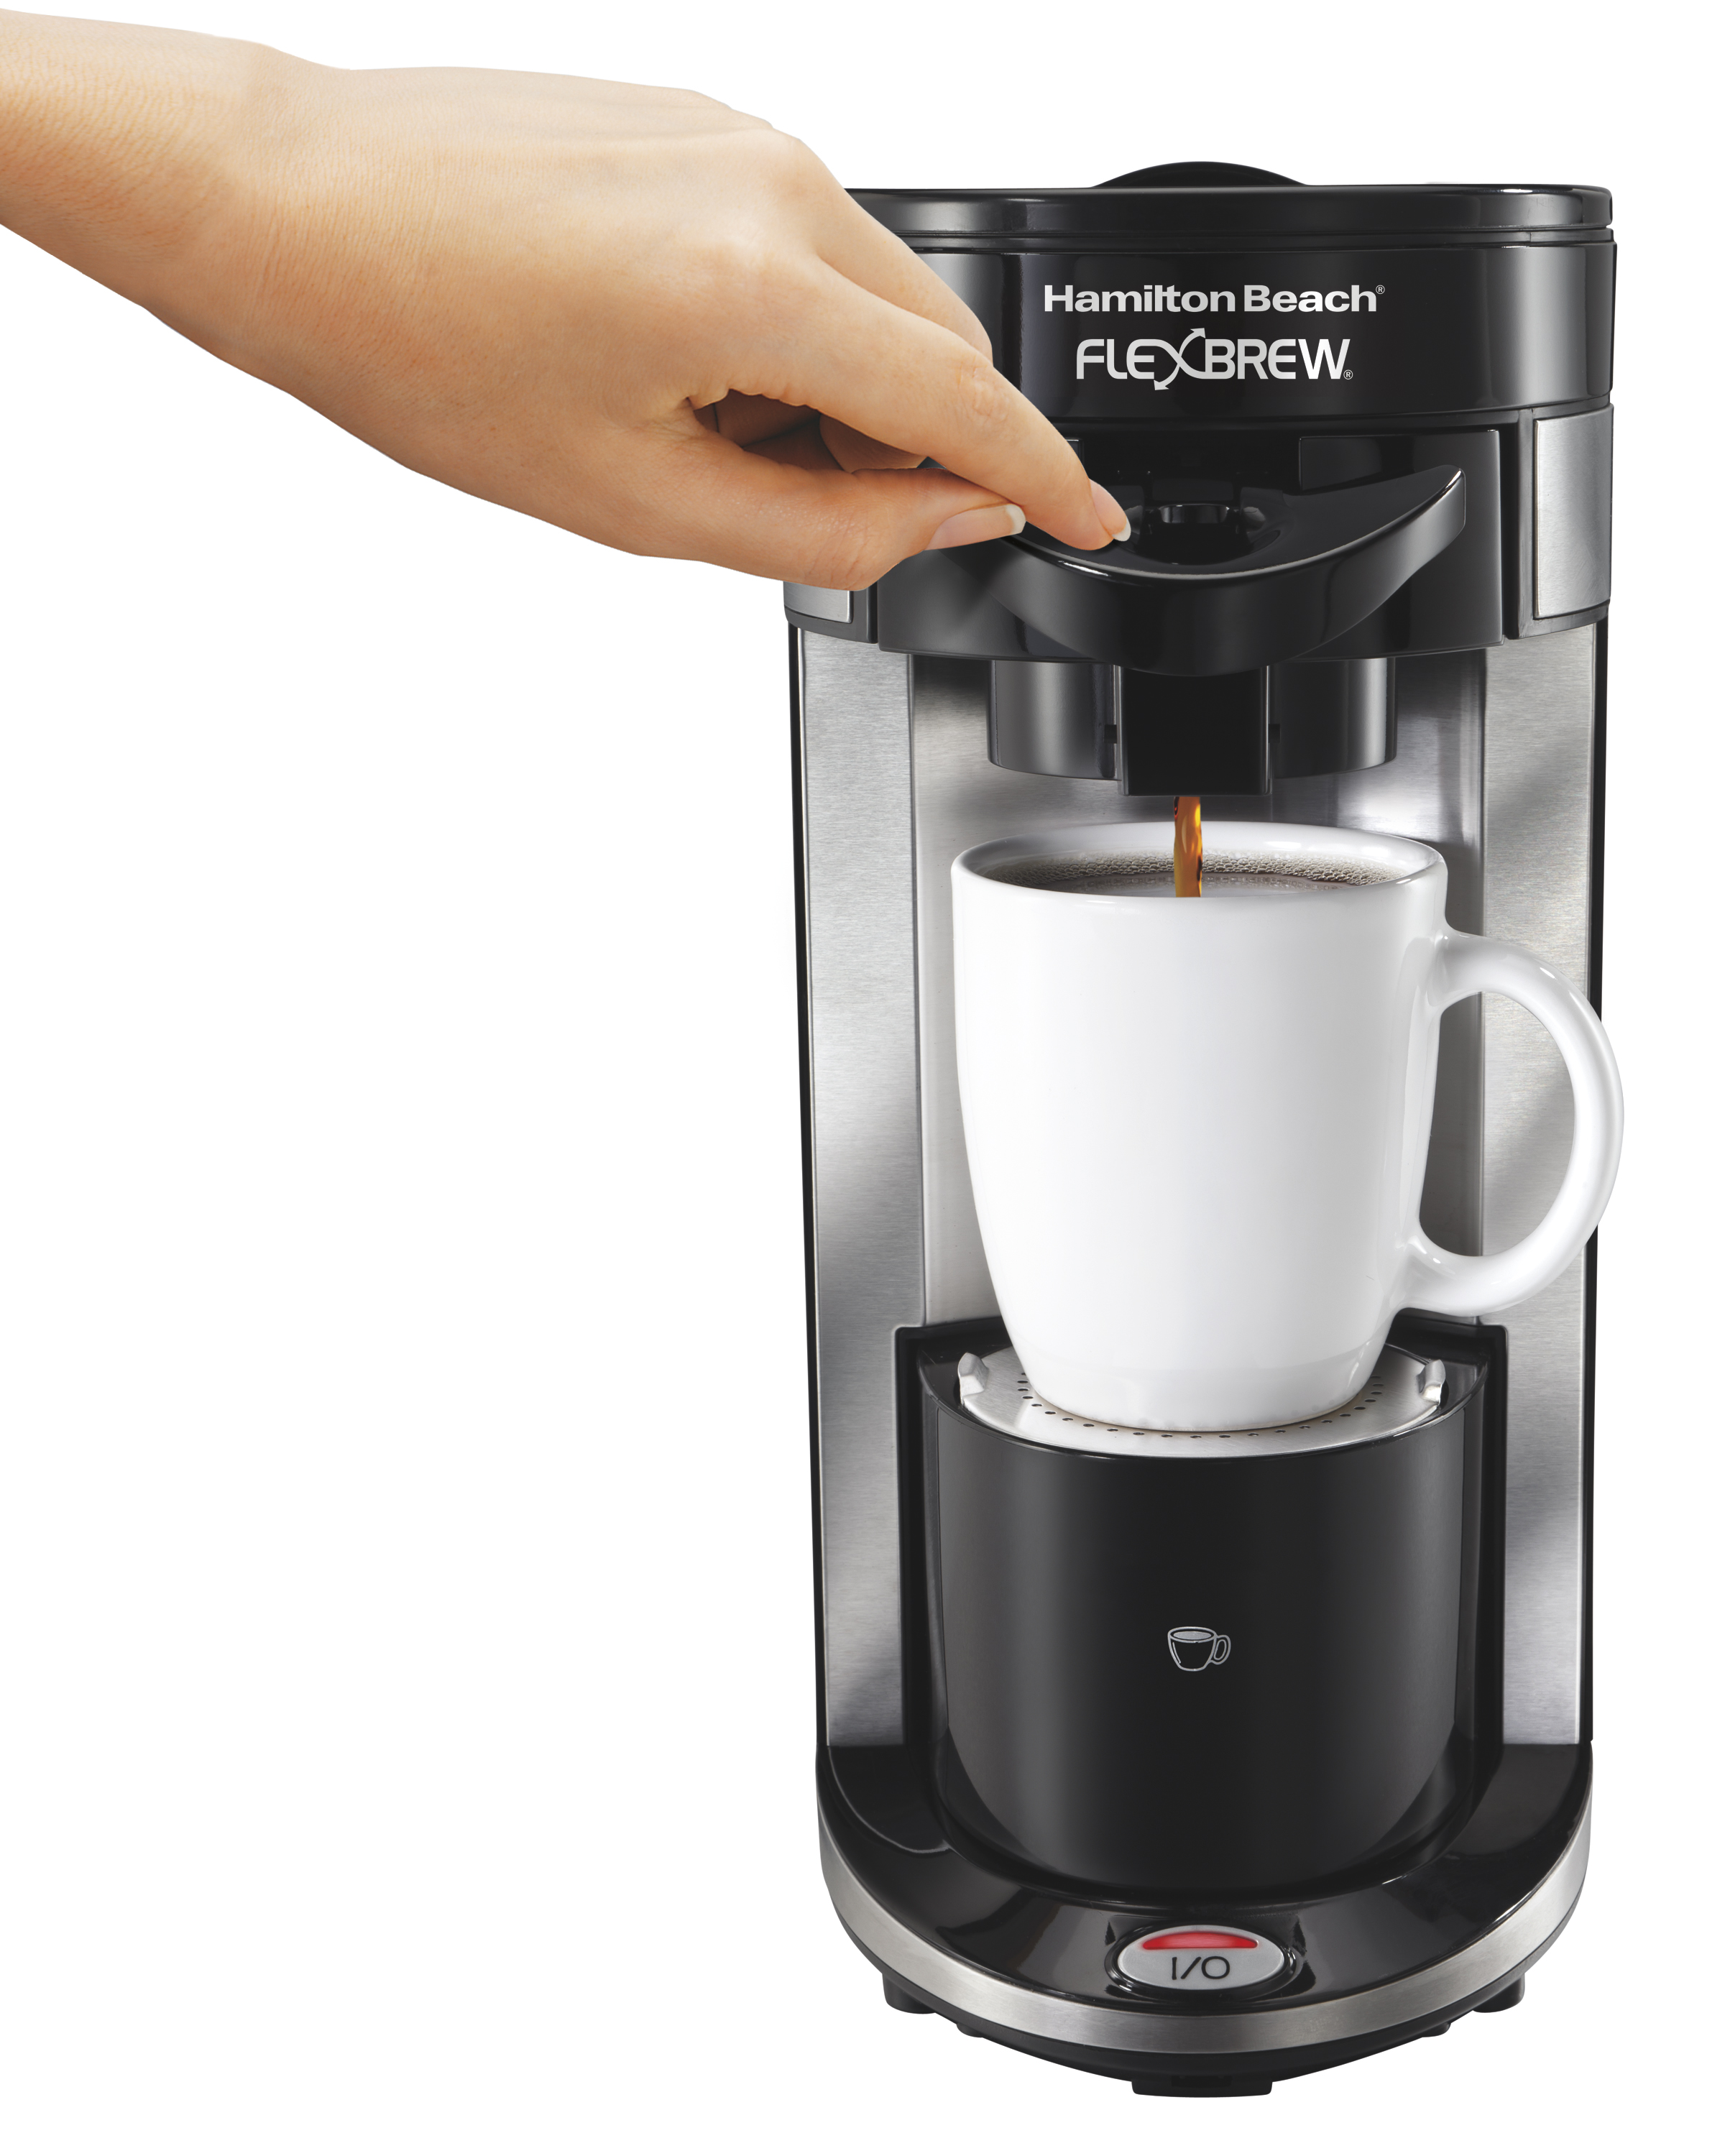 https://hamiltonbeach.com/media/products/flexbrew-singler-serve-coffee-maker-49995R-inset07.jpg